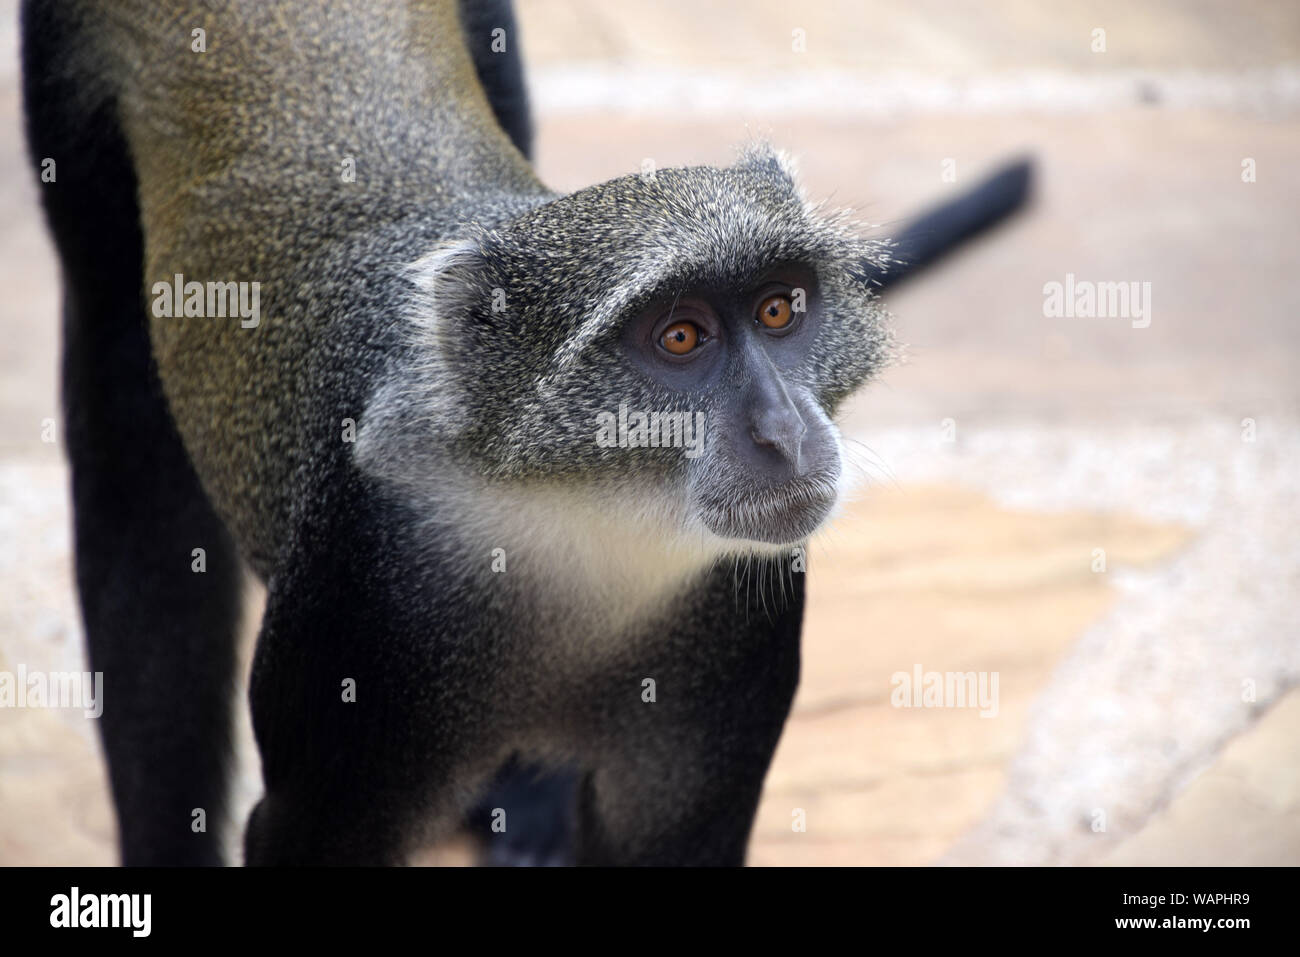 Adult Vervet monkey, portrait of a cute animal Stock Photo